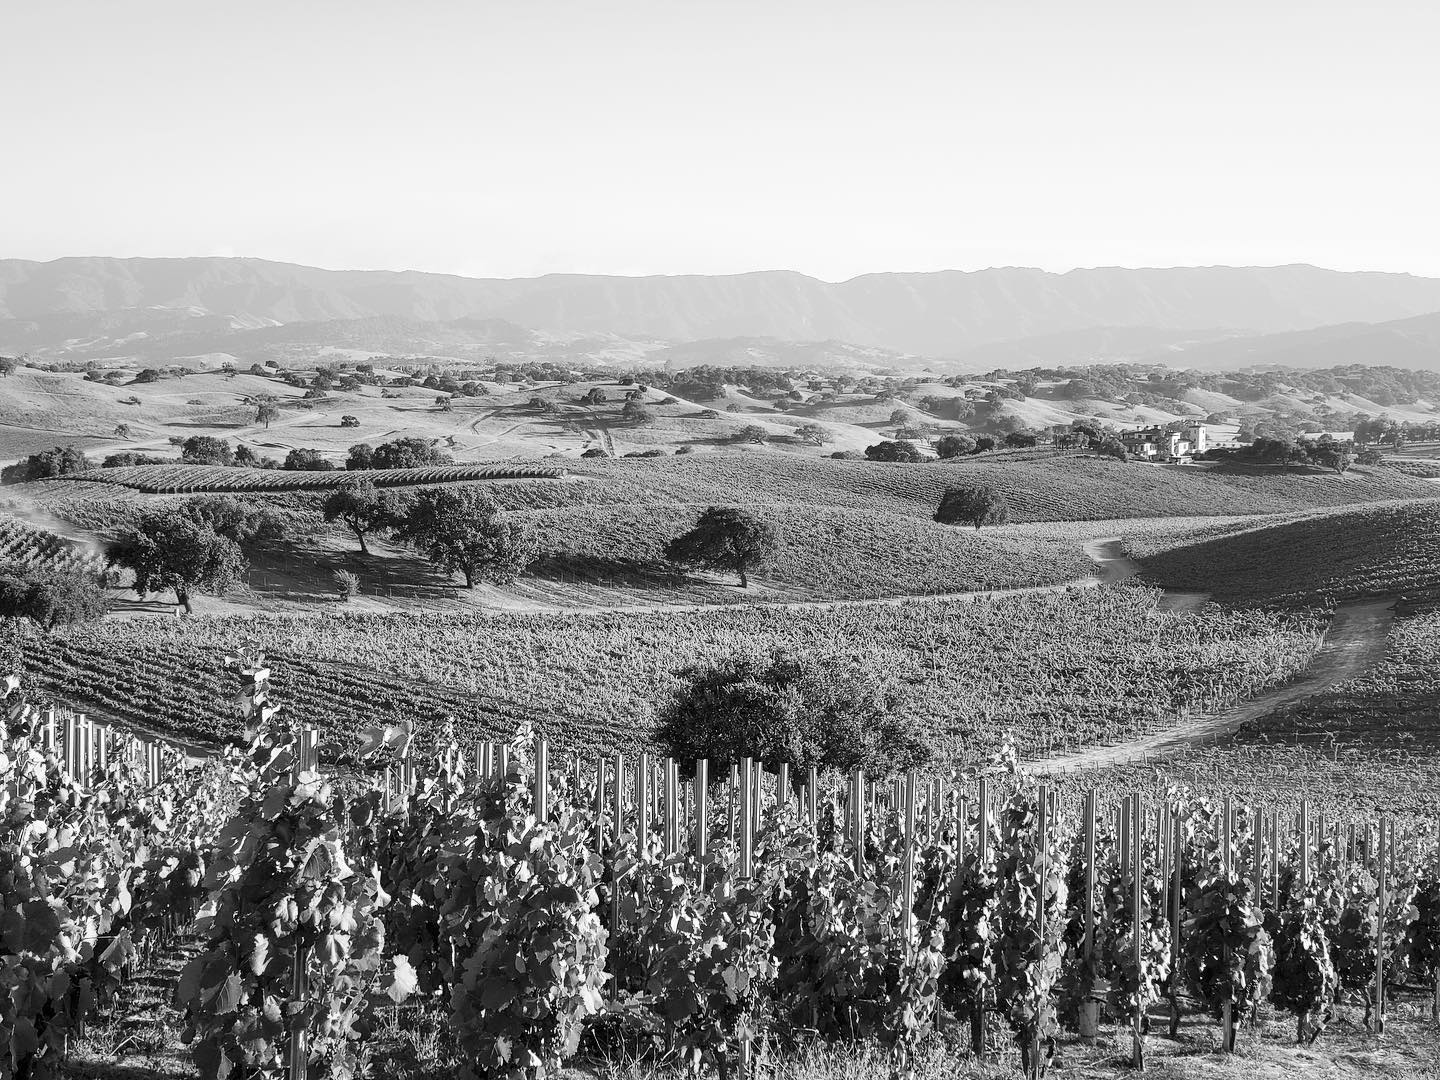 Landscape views of Stolpman Vineyards in Los Olives